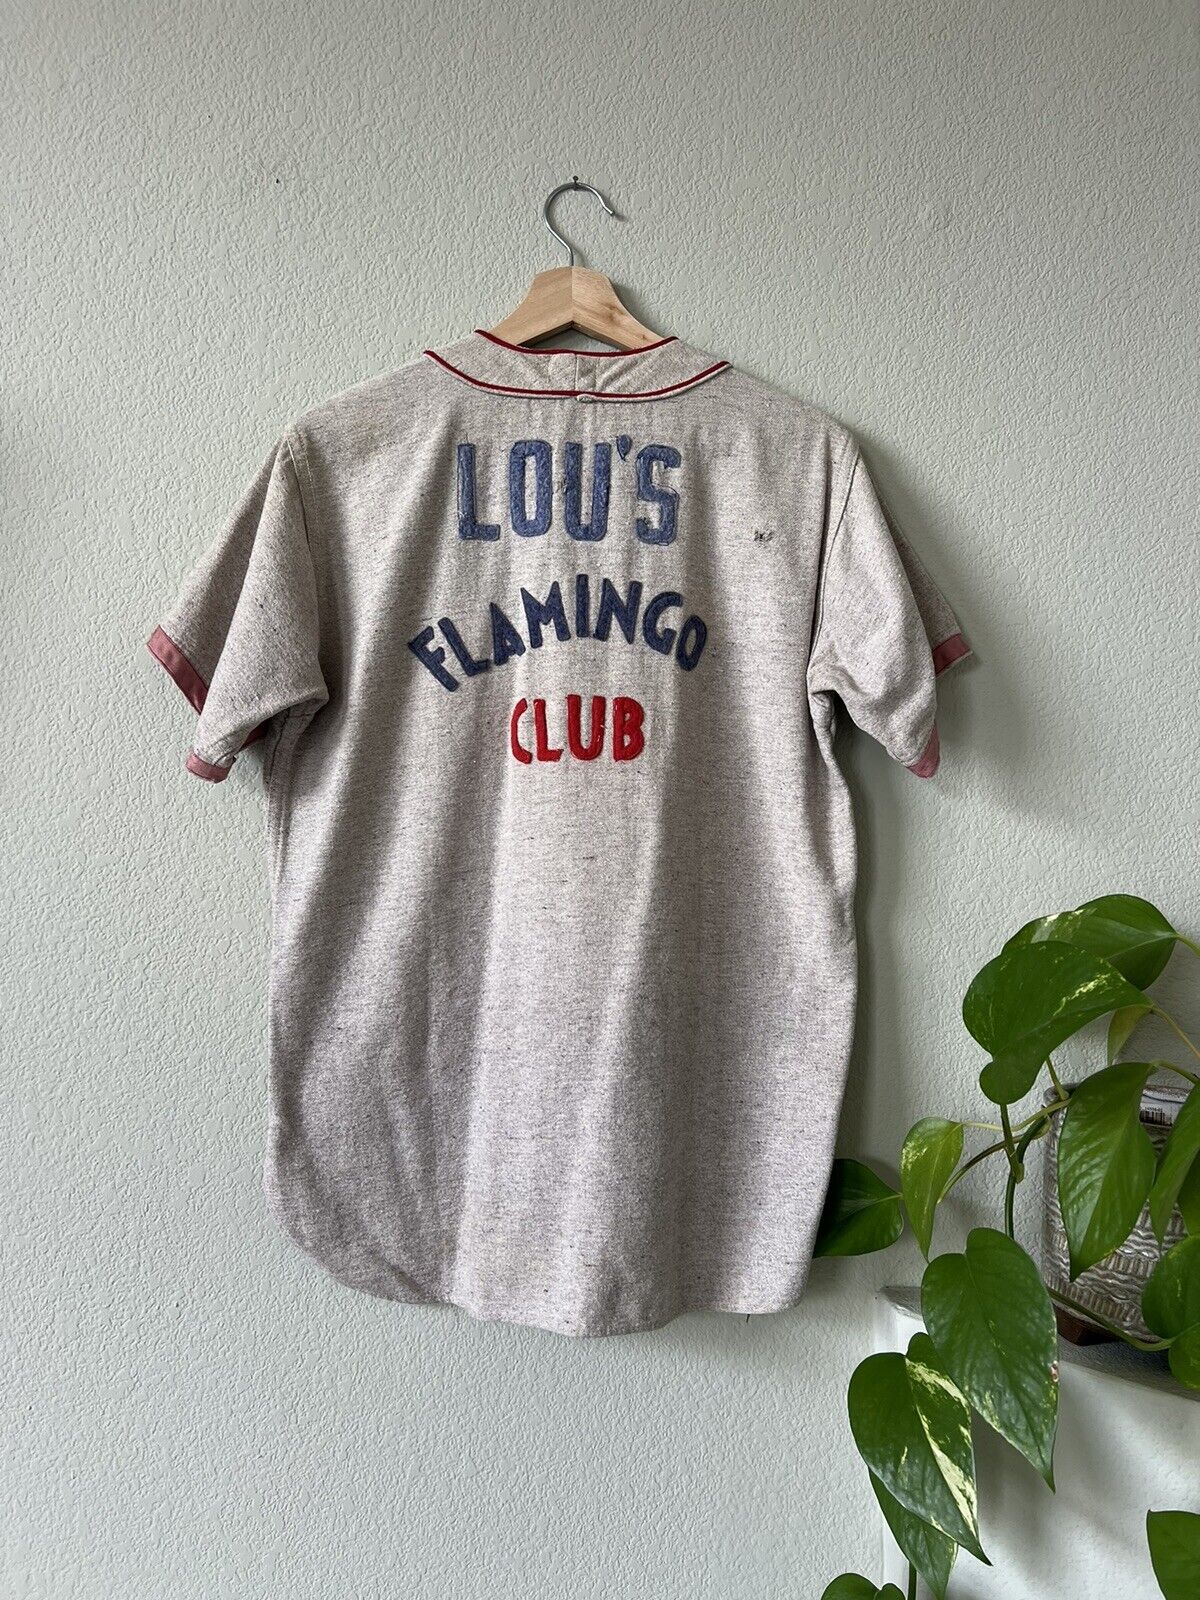 Vintage 1950s Lou’s Flamingo Club Wool Baseball Jersey